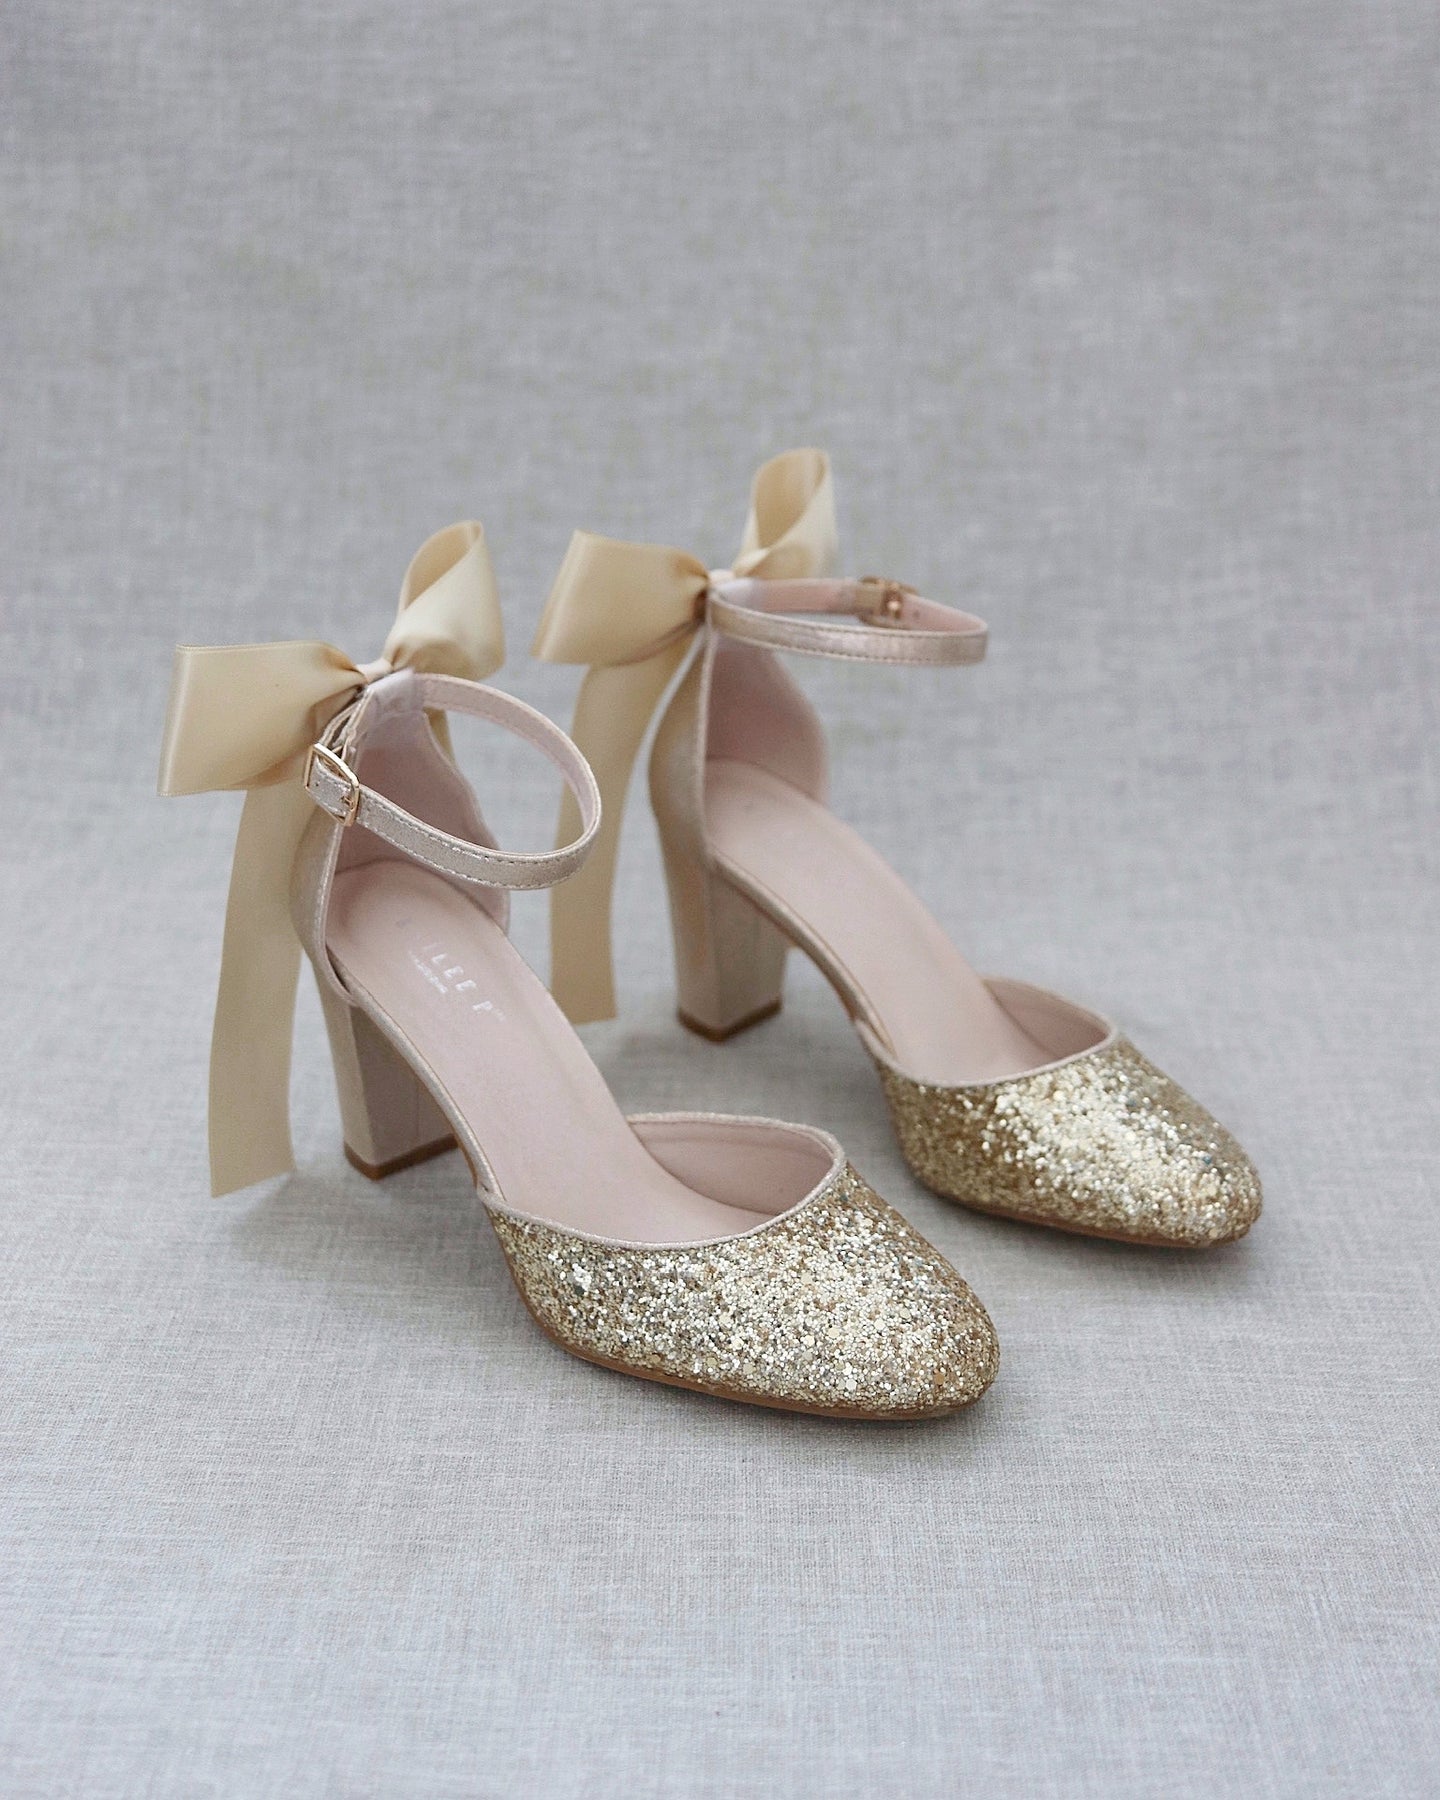 BOBS by Skechers Gold Glitter Shoes Alpargata Loafers Slip On Sneakers: 9 | Gold  glitter shoes, Glitter shoes, Slip on sneakers